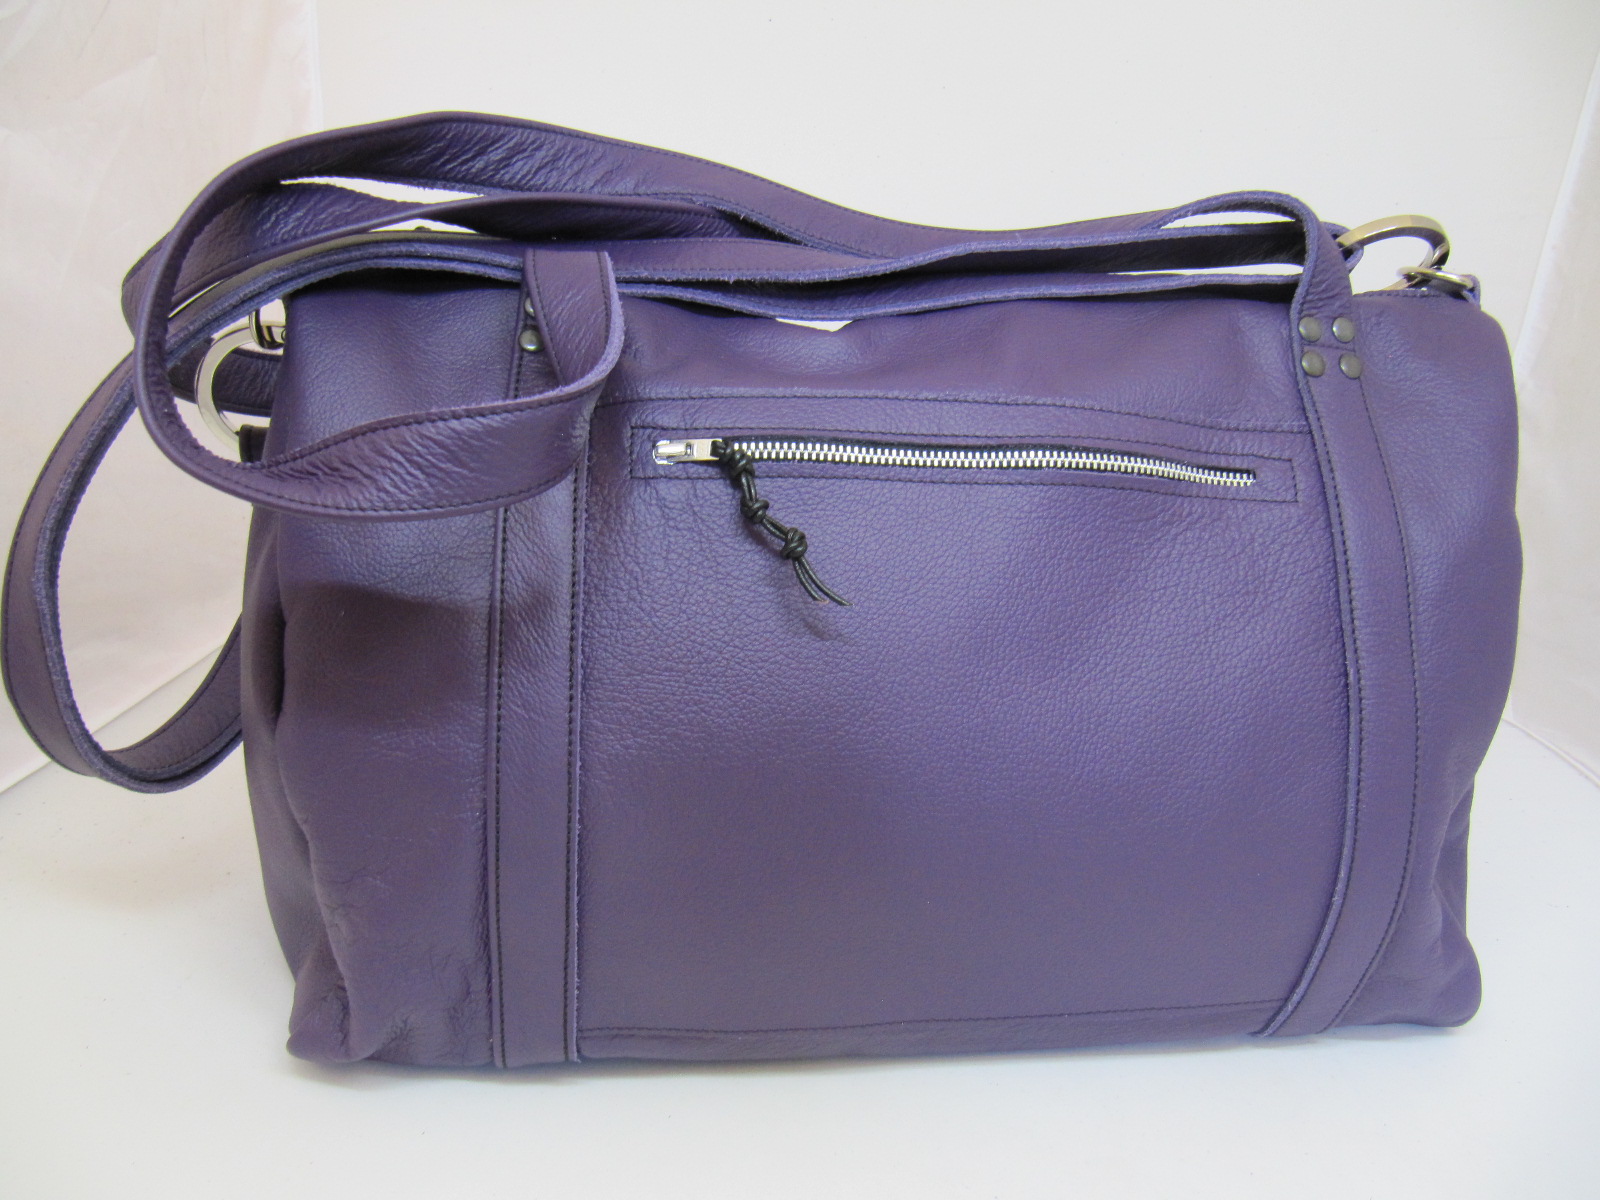 Purple leather overnight bag